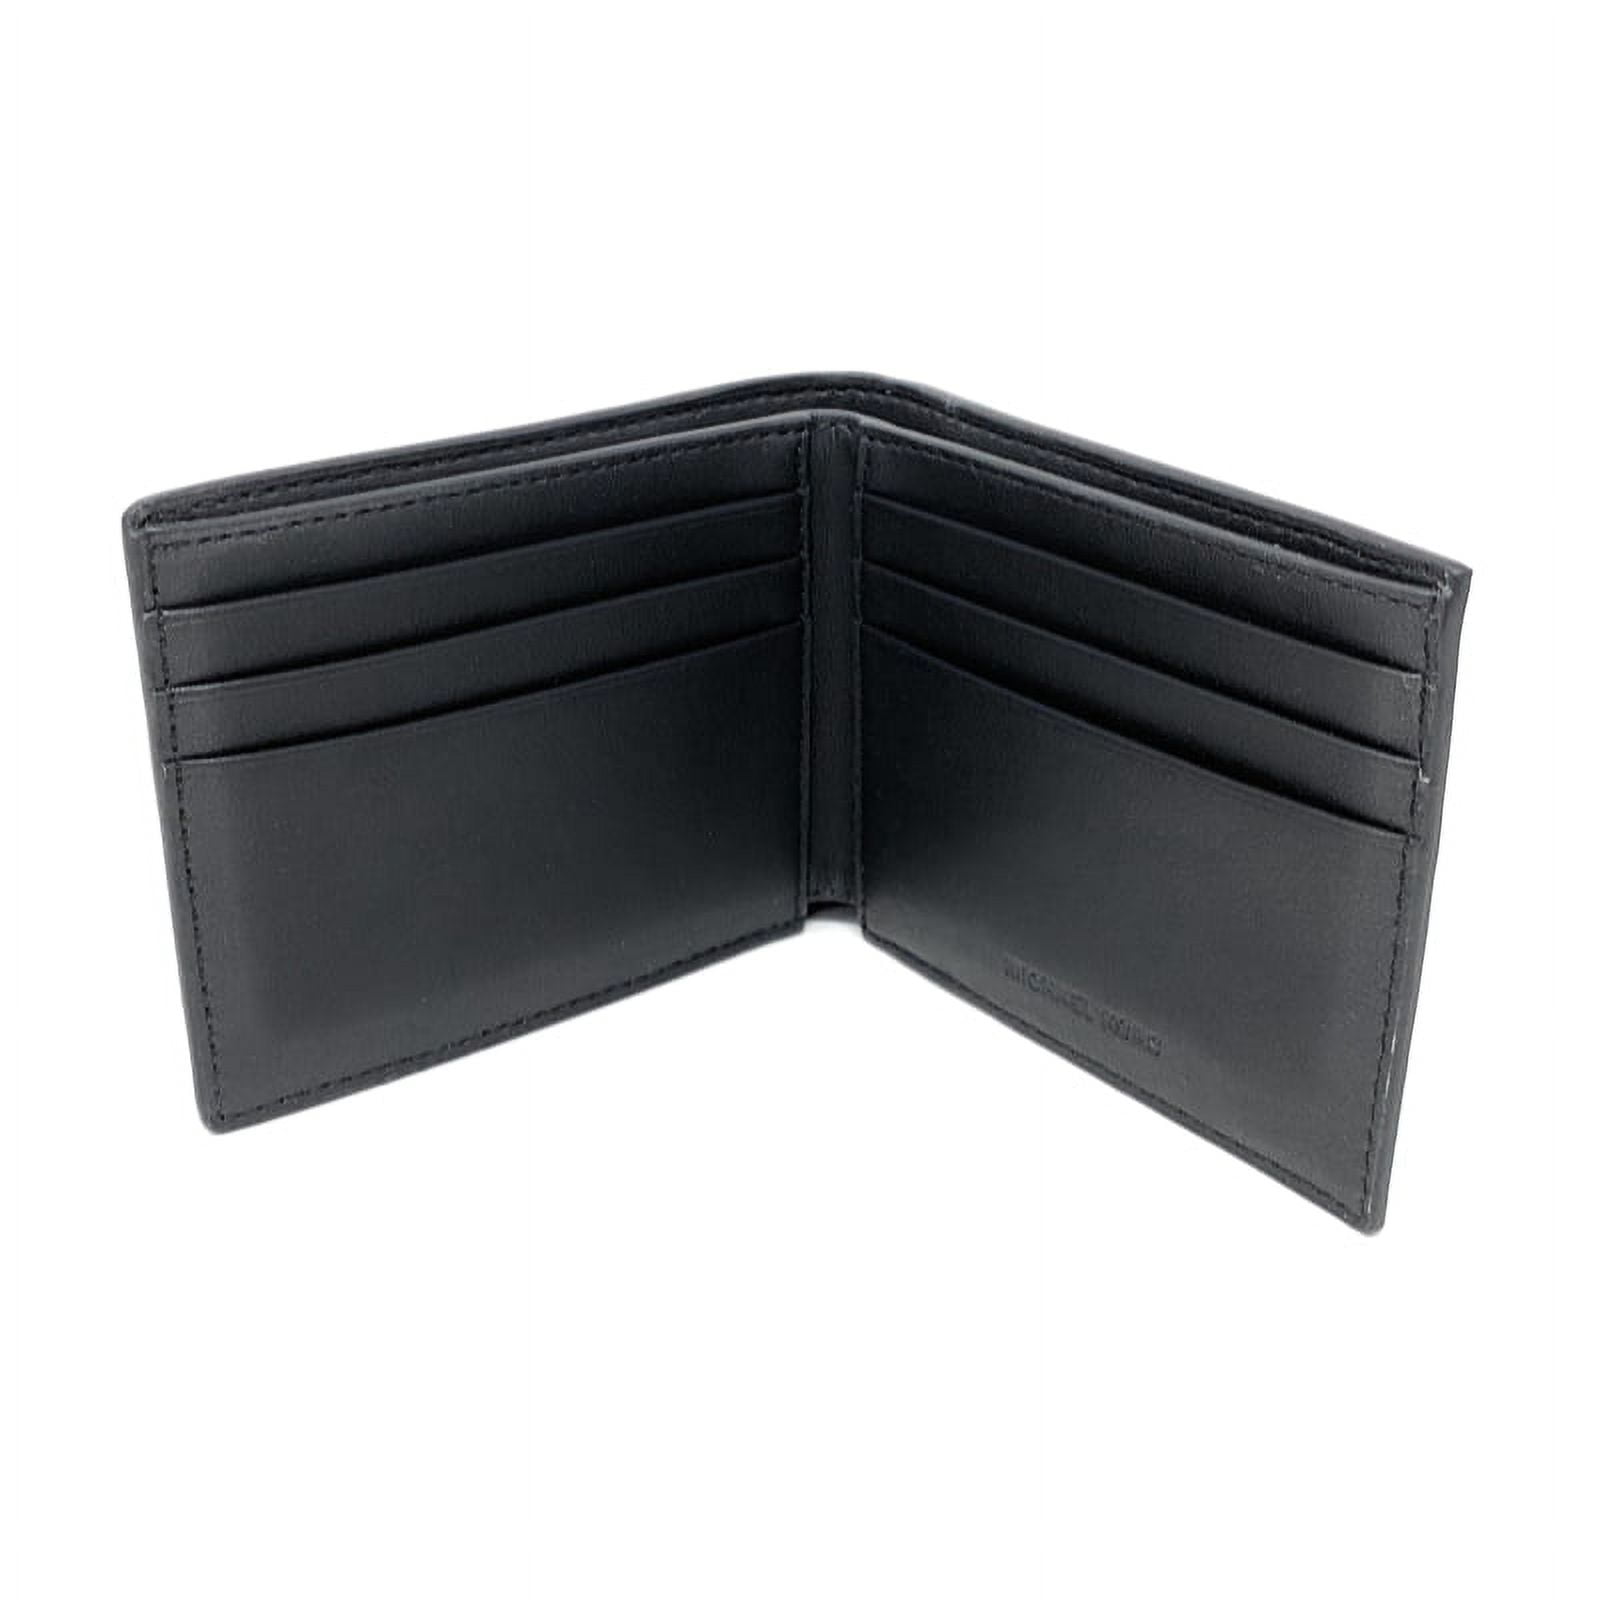 Michael Kors Men’s Jet Set Slim Billfold Wallet New in Box with Tags $88